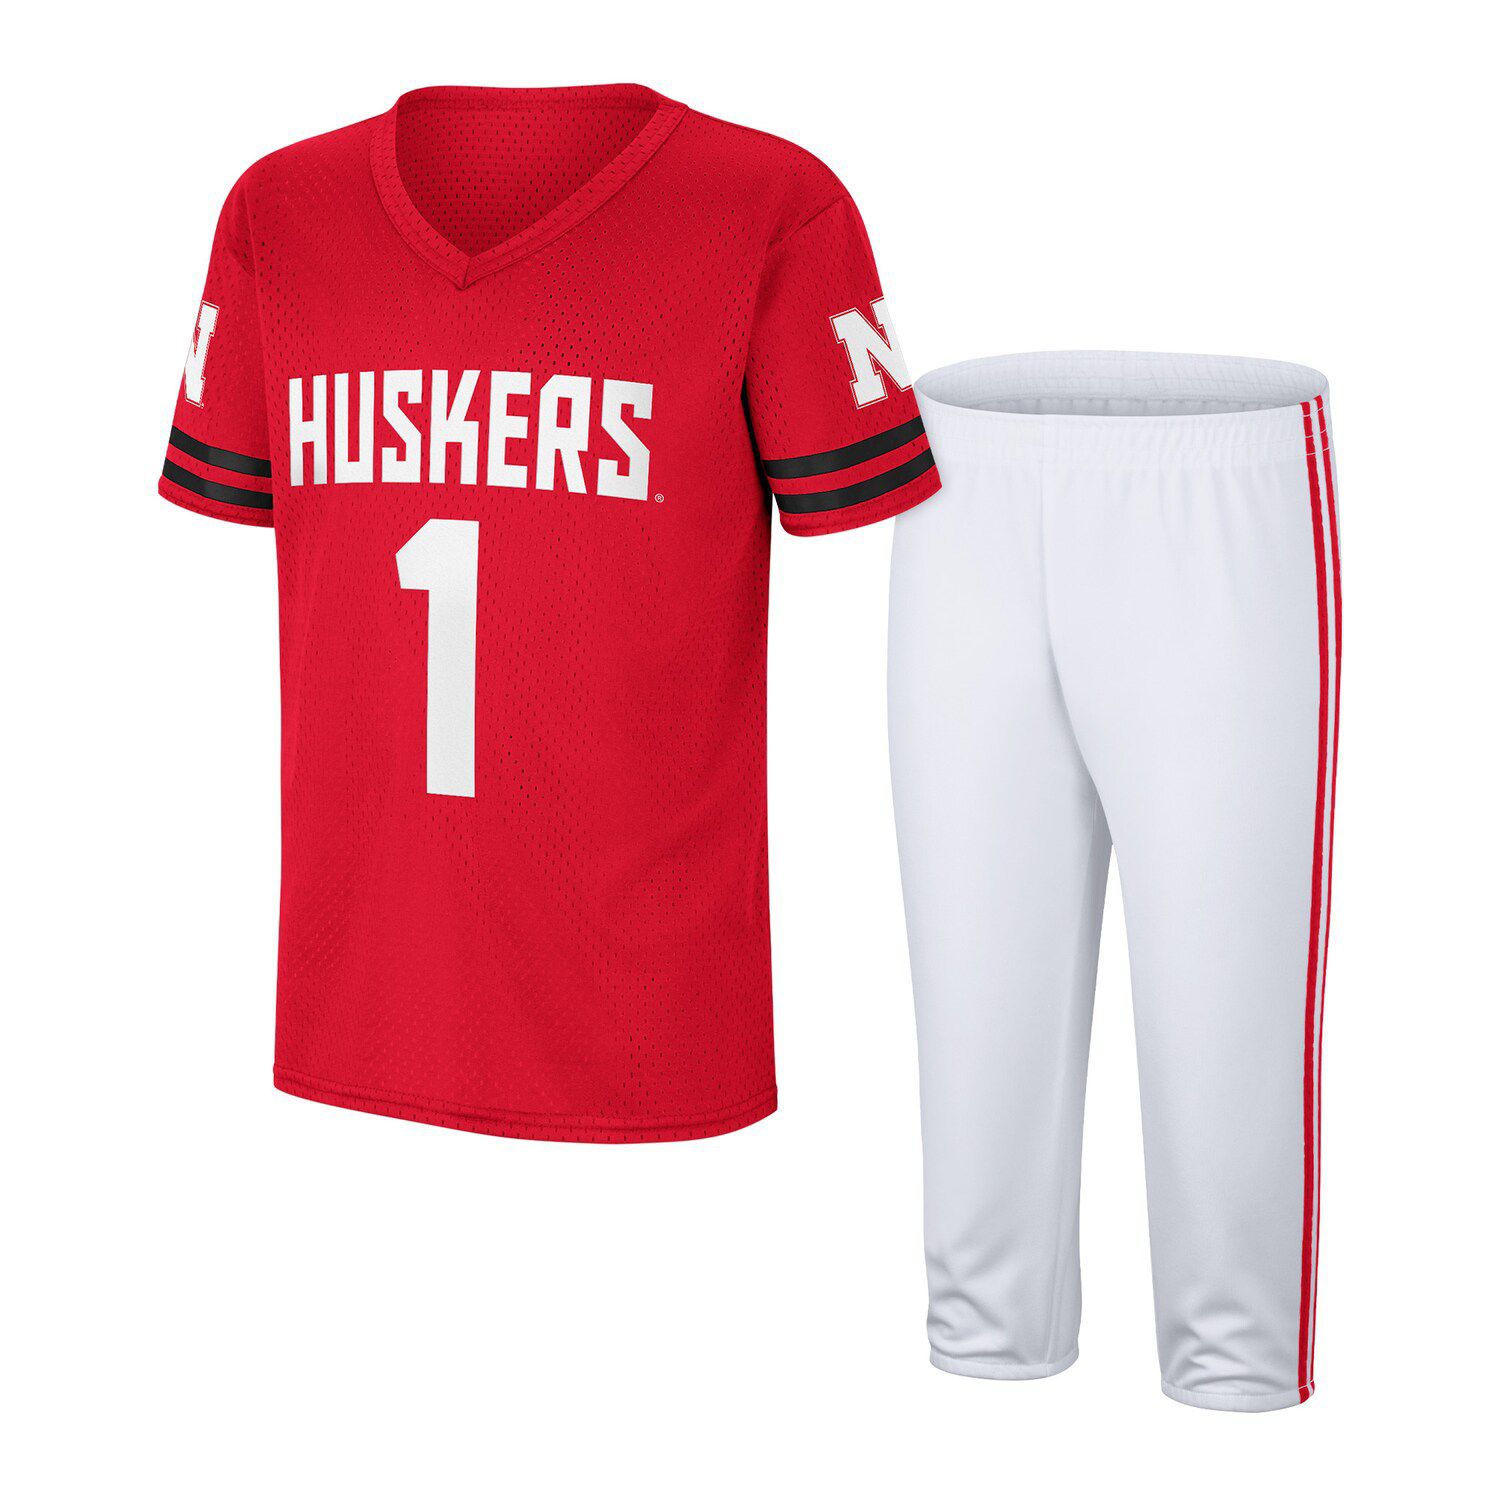 Adidas Men's #20 White Nebraska Huskers Premier Strategy Football Jersey